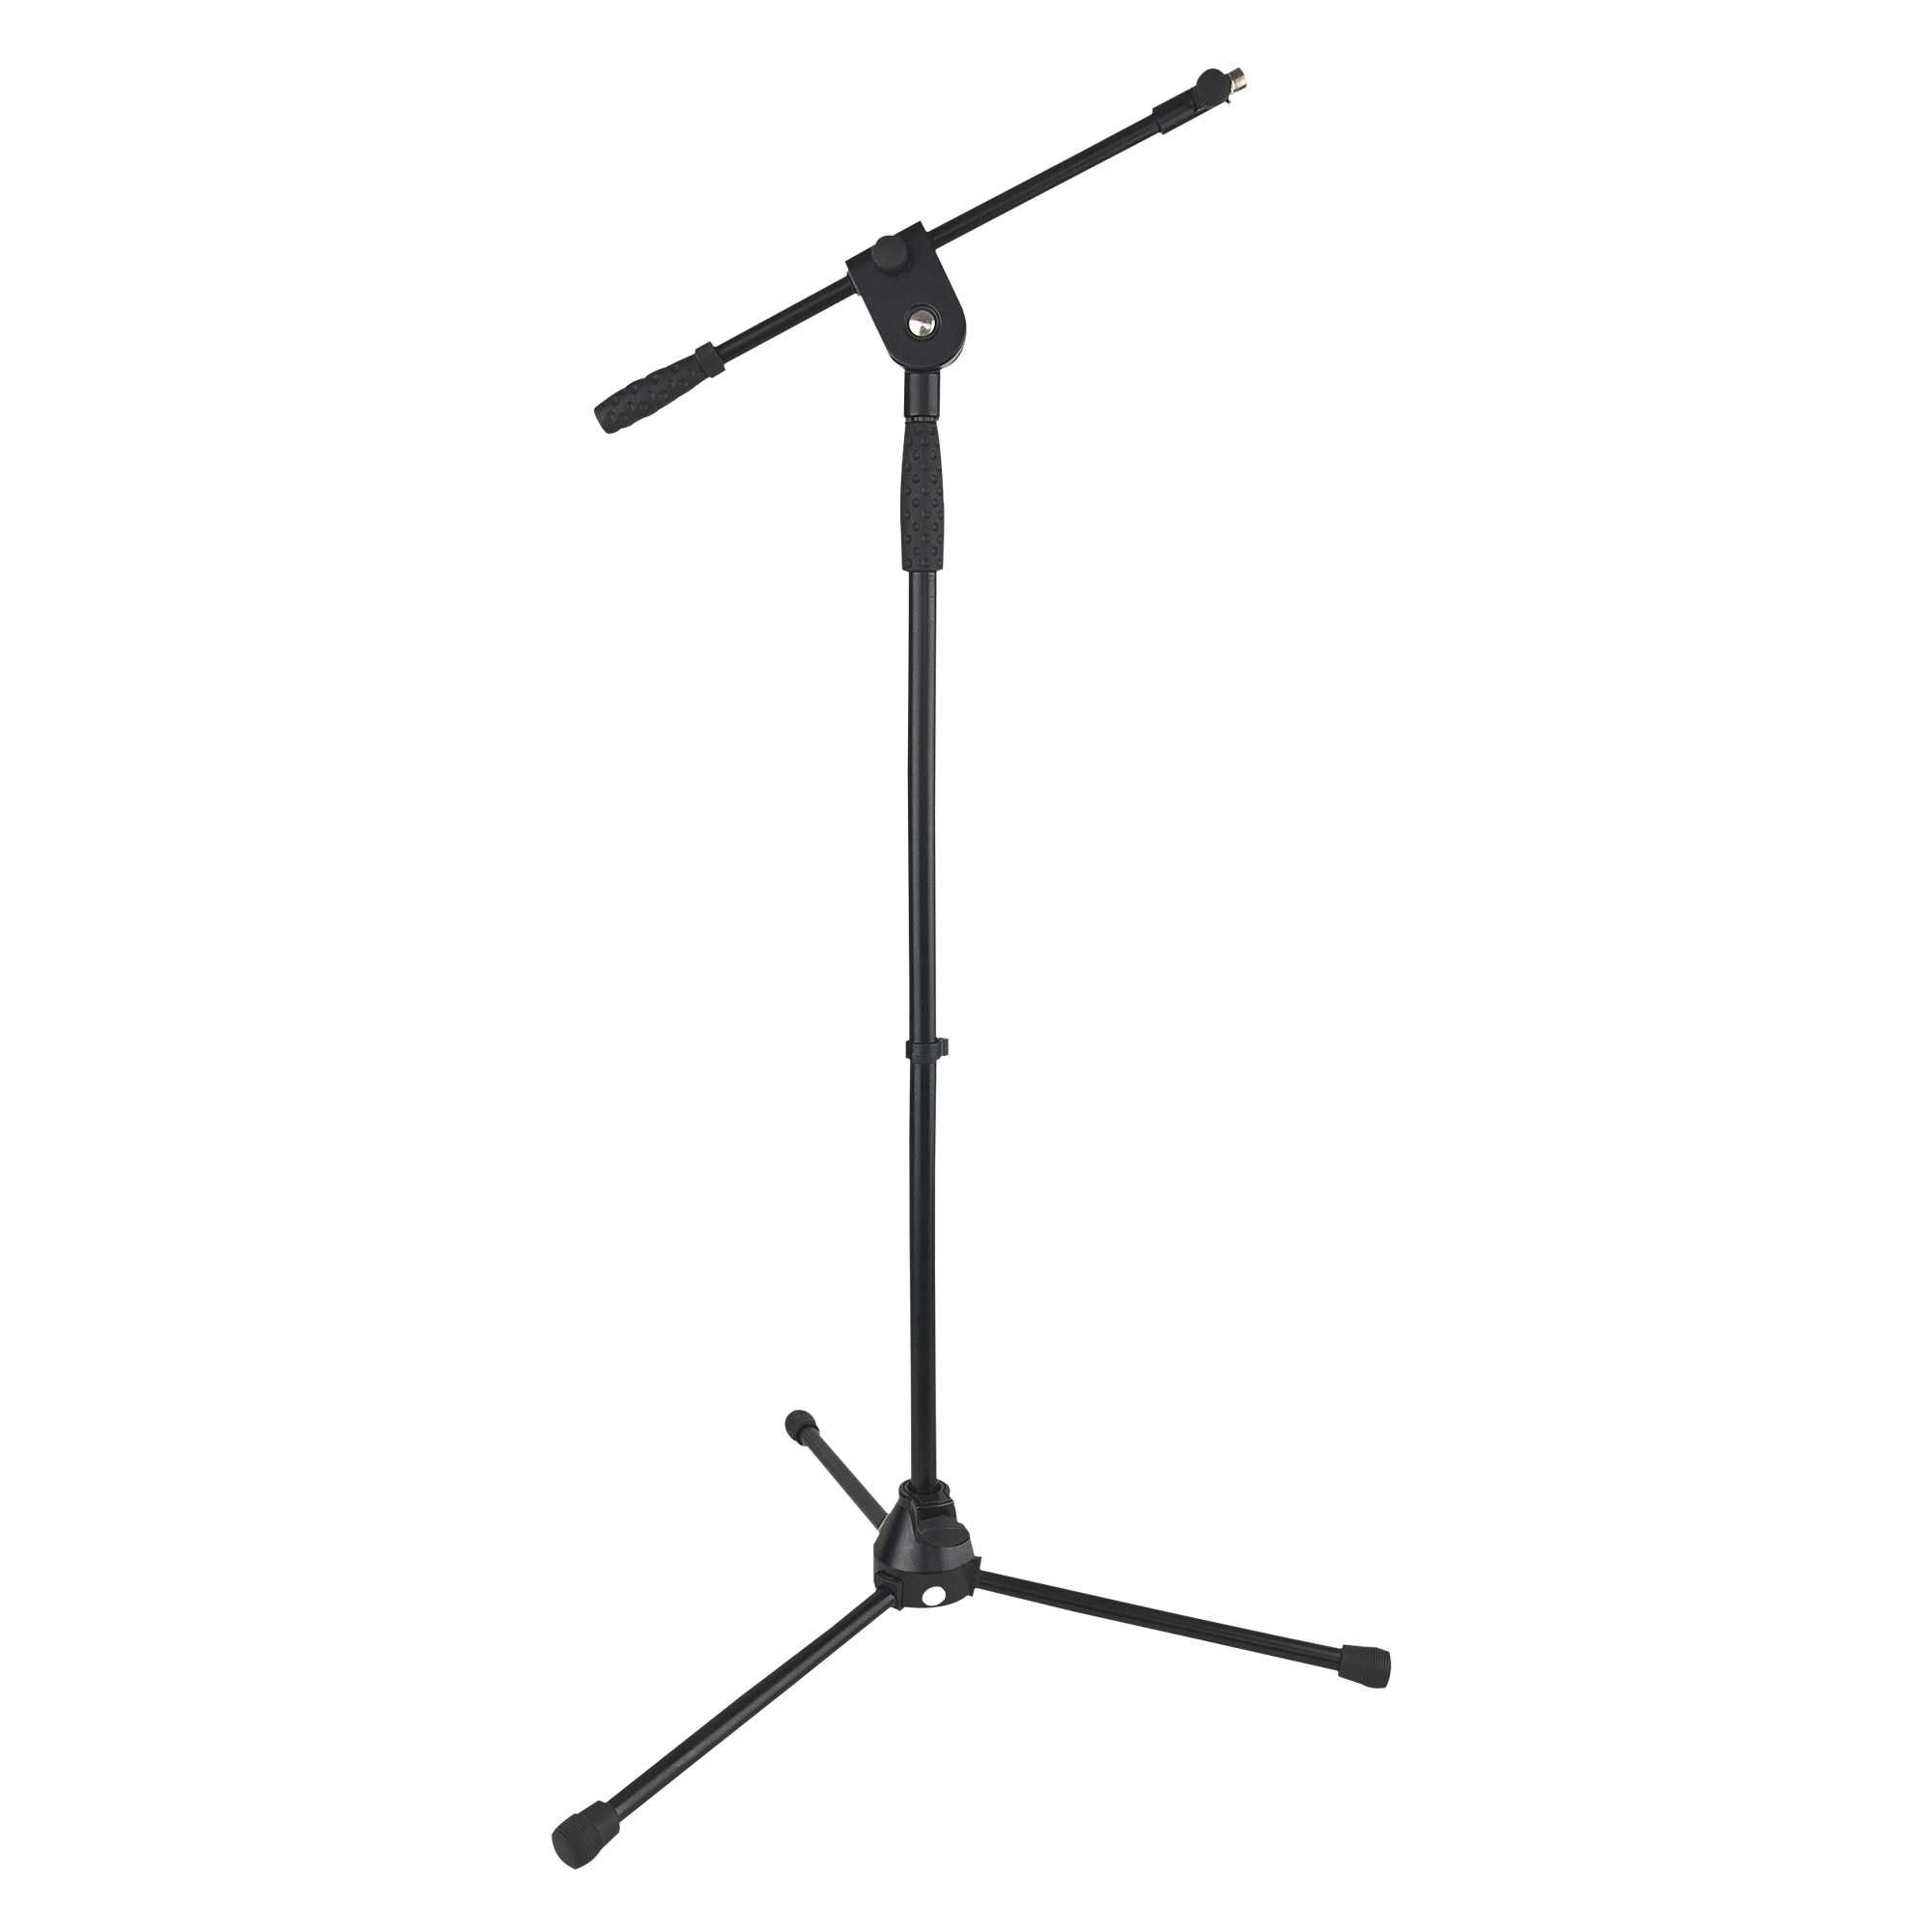 Showgear Microphone Stand - Ergo 1 905-1600mm